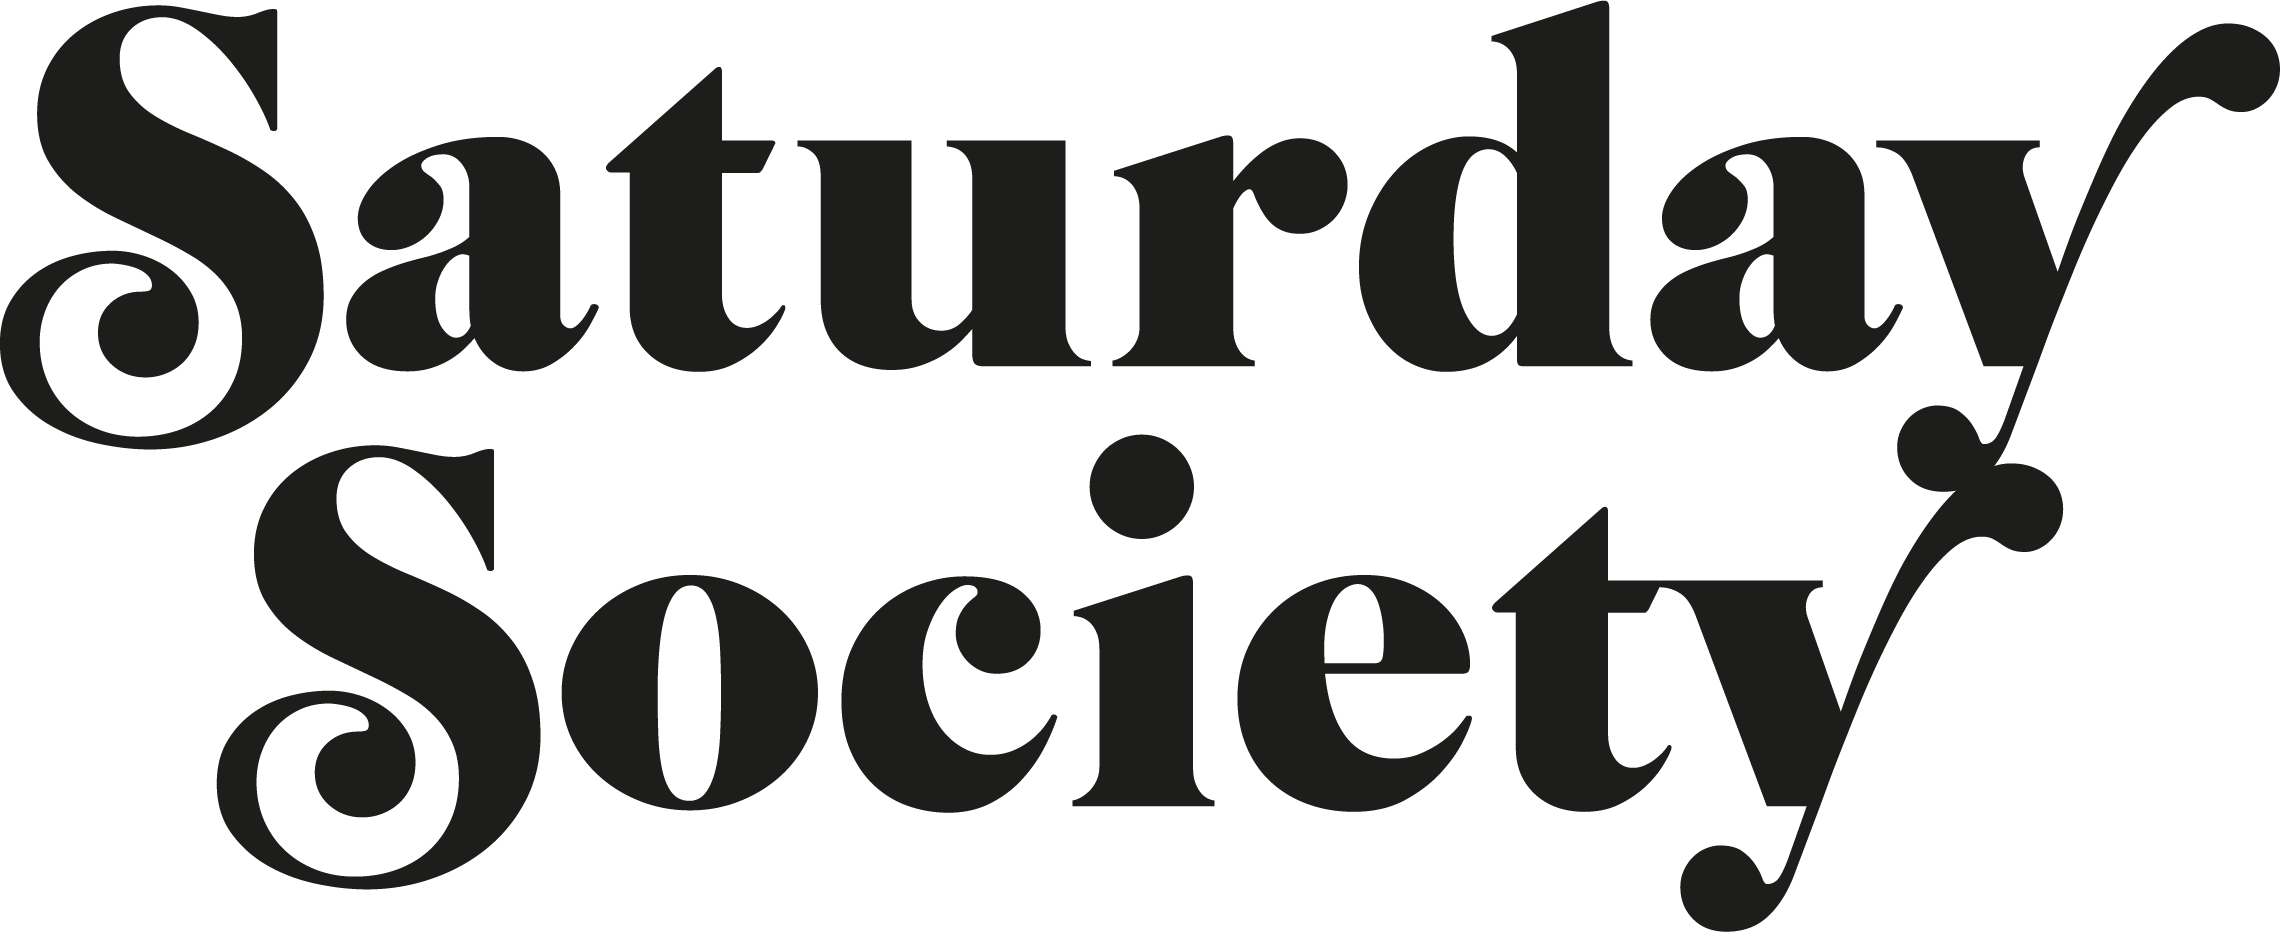 Saturday Society Logo